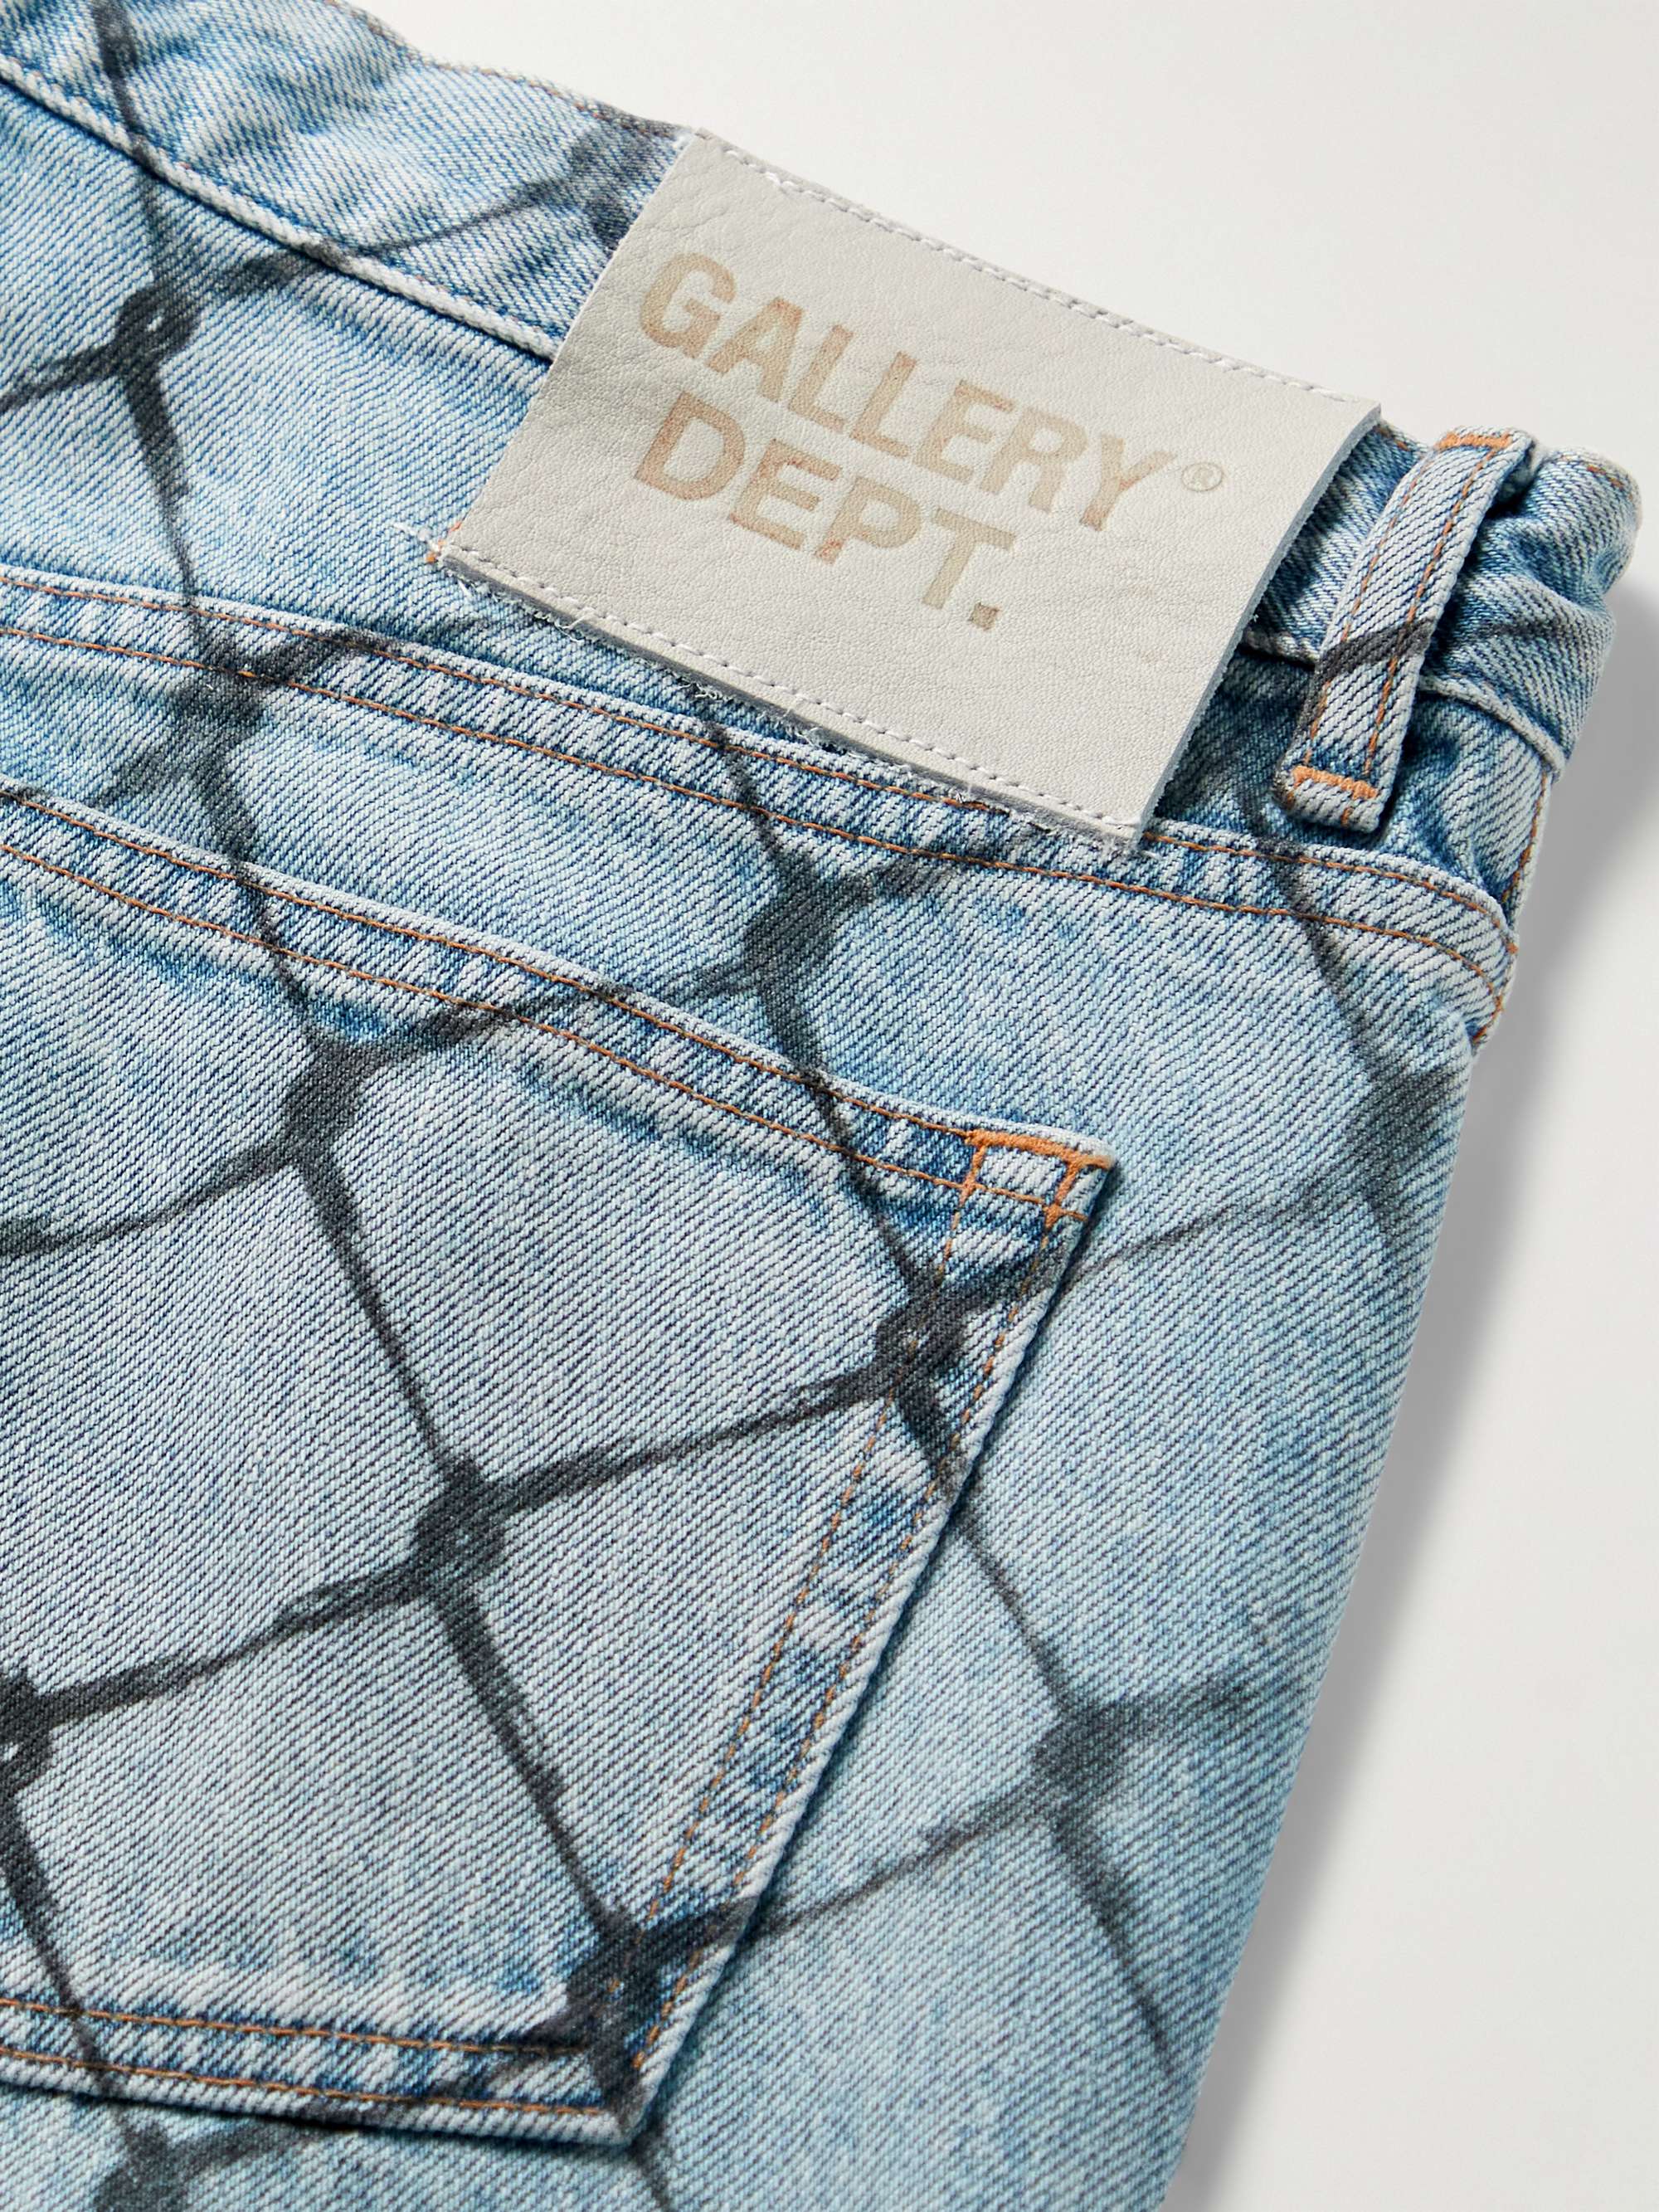 GALLERY DEPT. Cage 5001 Slim-Fit Frayed Printed Jeans